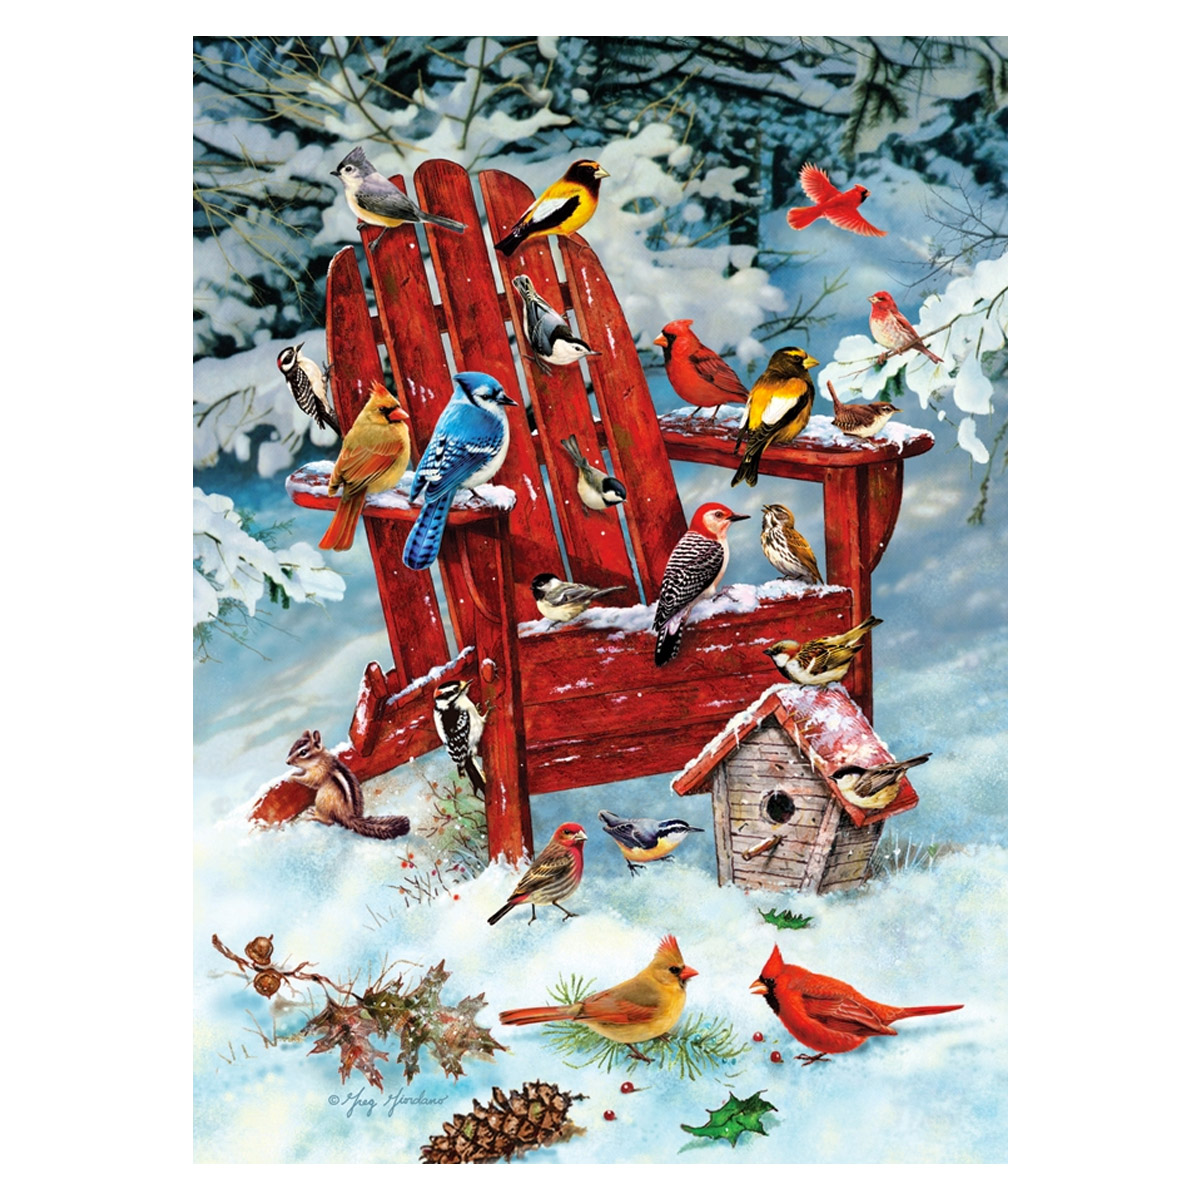 Adirondack Birds 1000 piece jigsaw, 40164